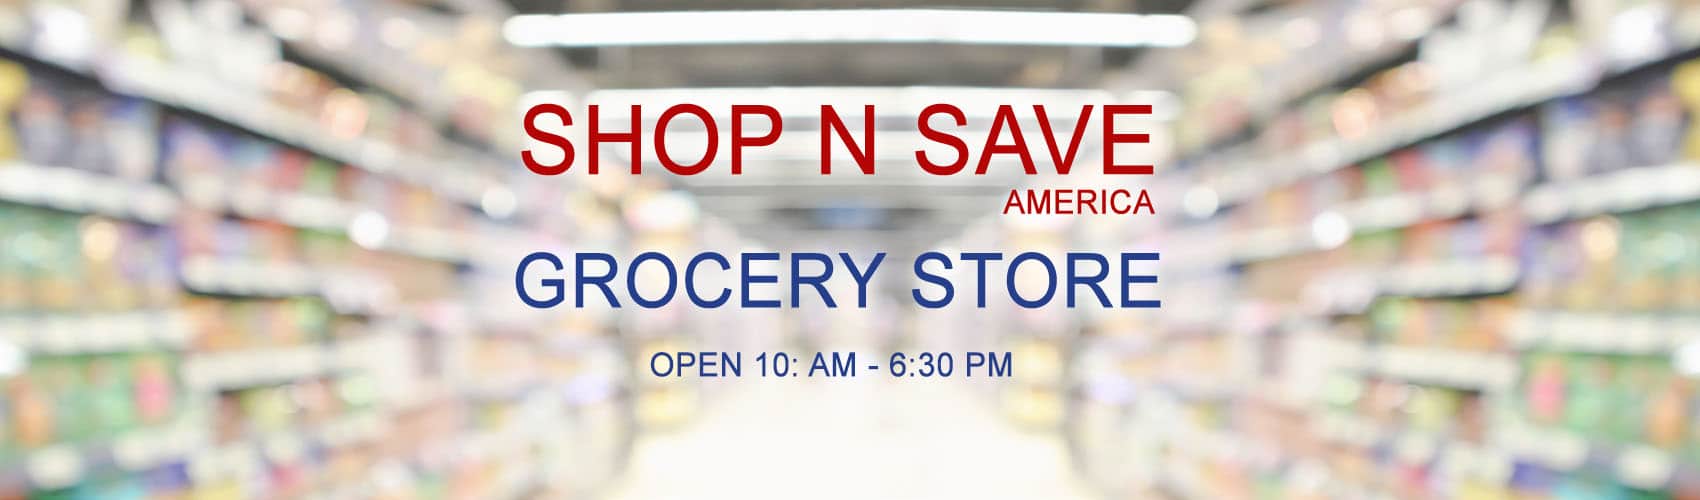 Shop n Save America logo